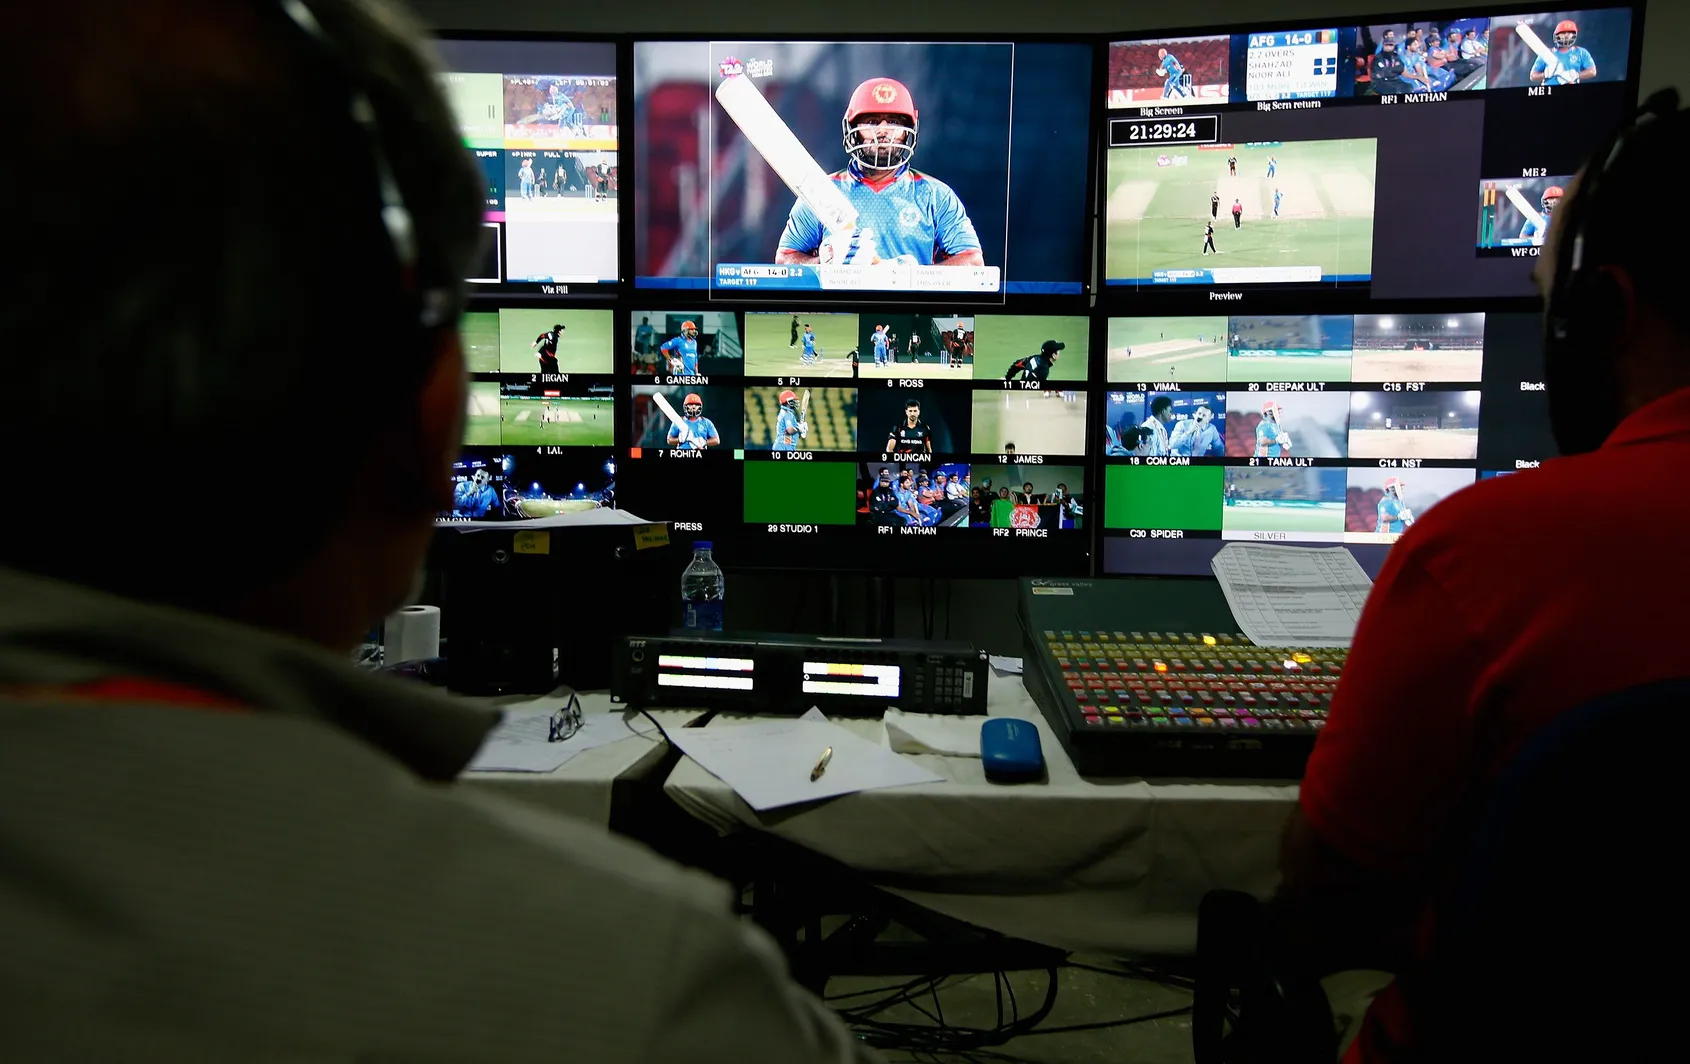 ICC Cricket Media Rights With Disney+Hotstar